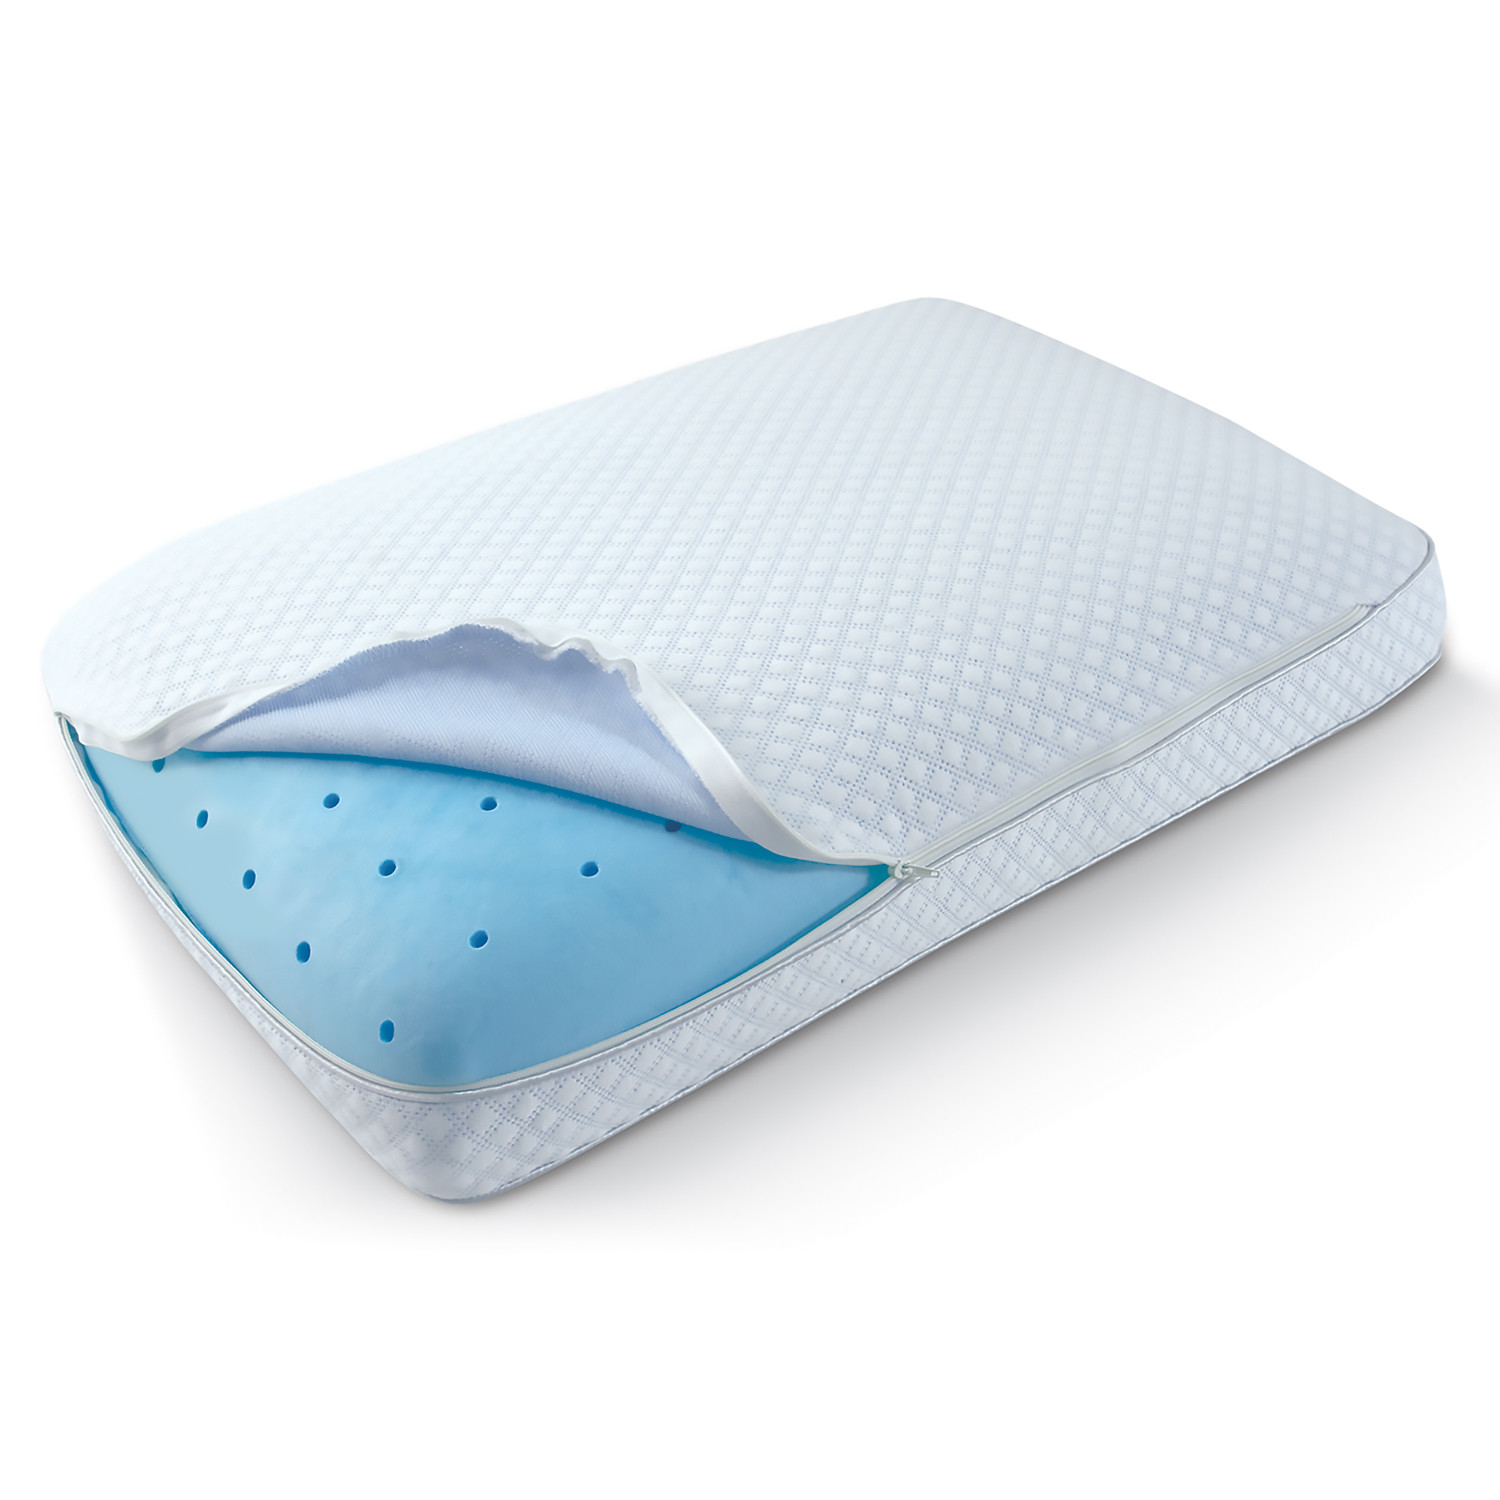 Artic Sleep Europeutic Big + Soft Cooling Gel Memory Foam Gel Pillow ...